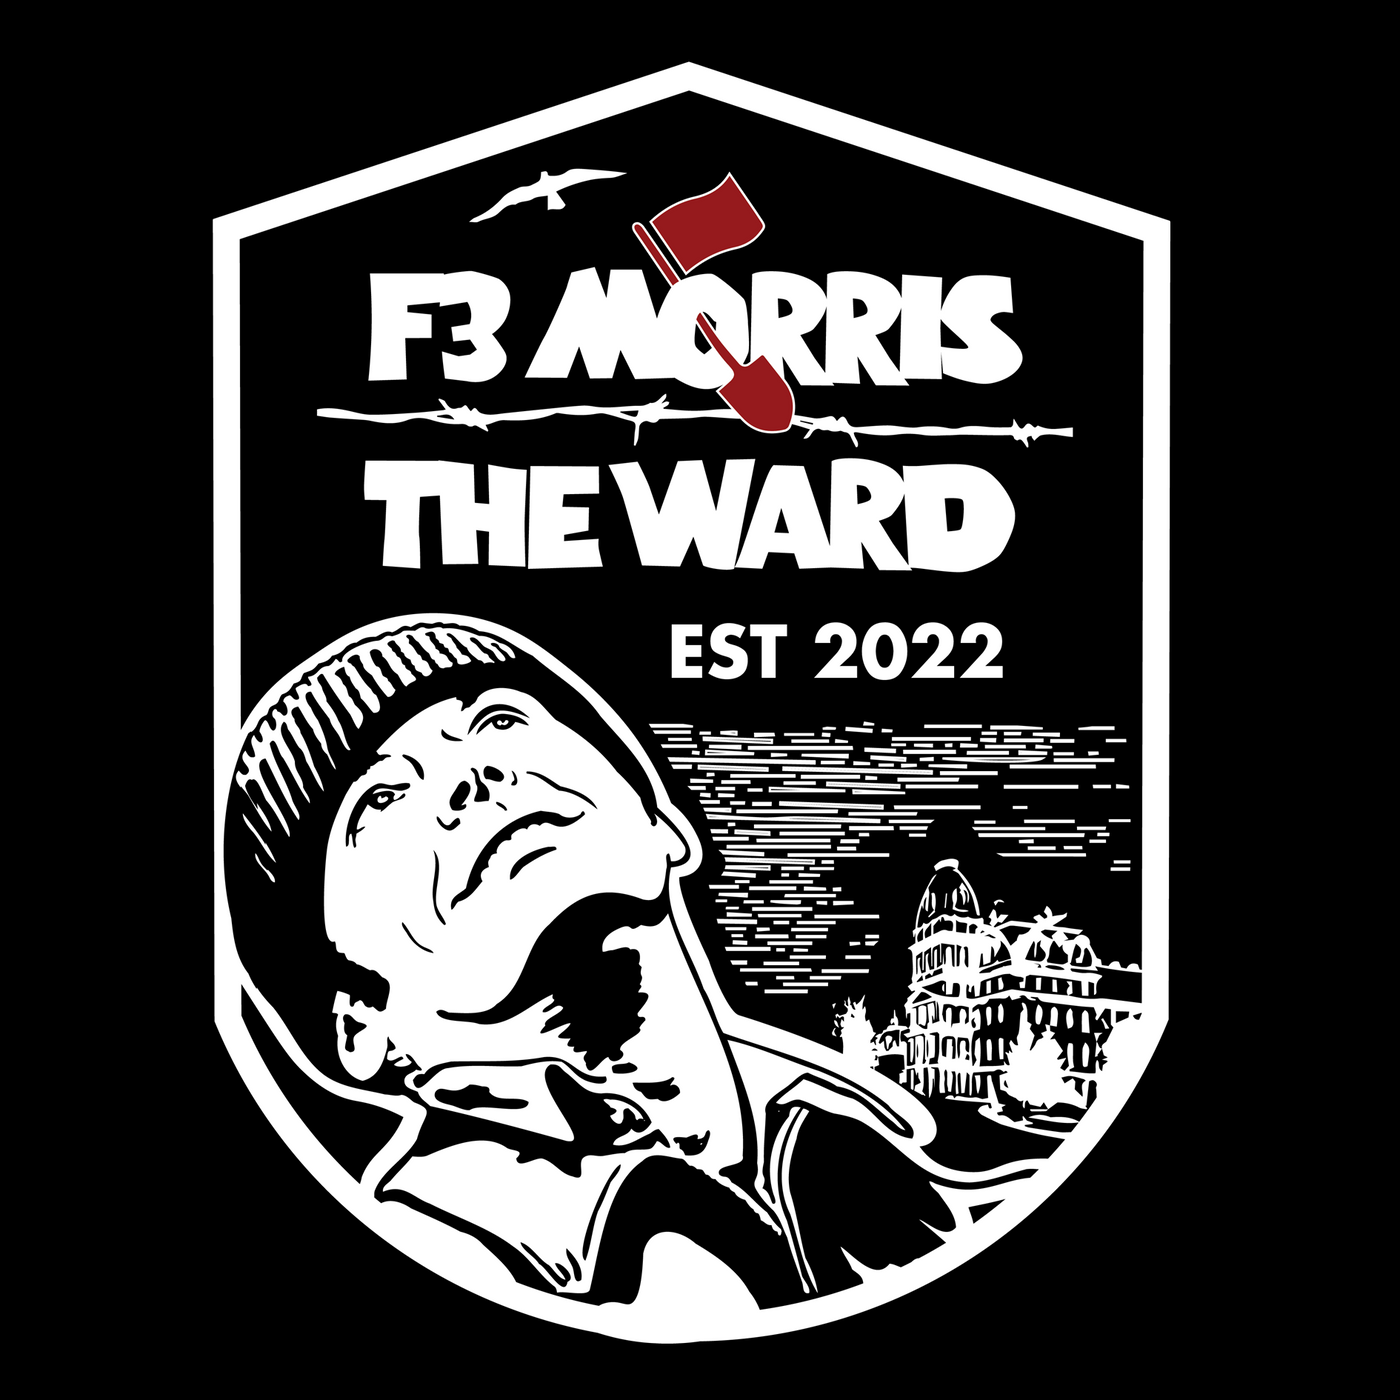 F3 Morris the Ward Pre-Order September 2023